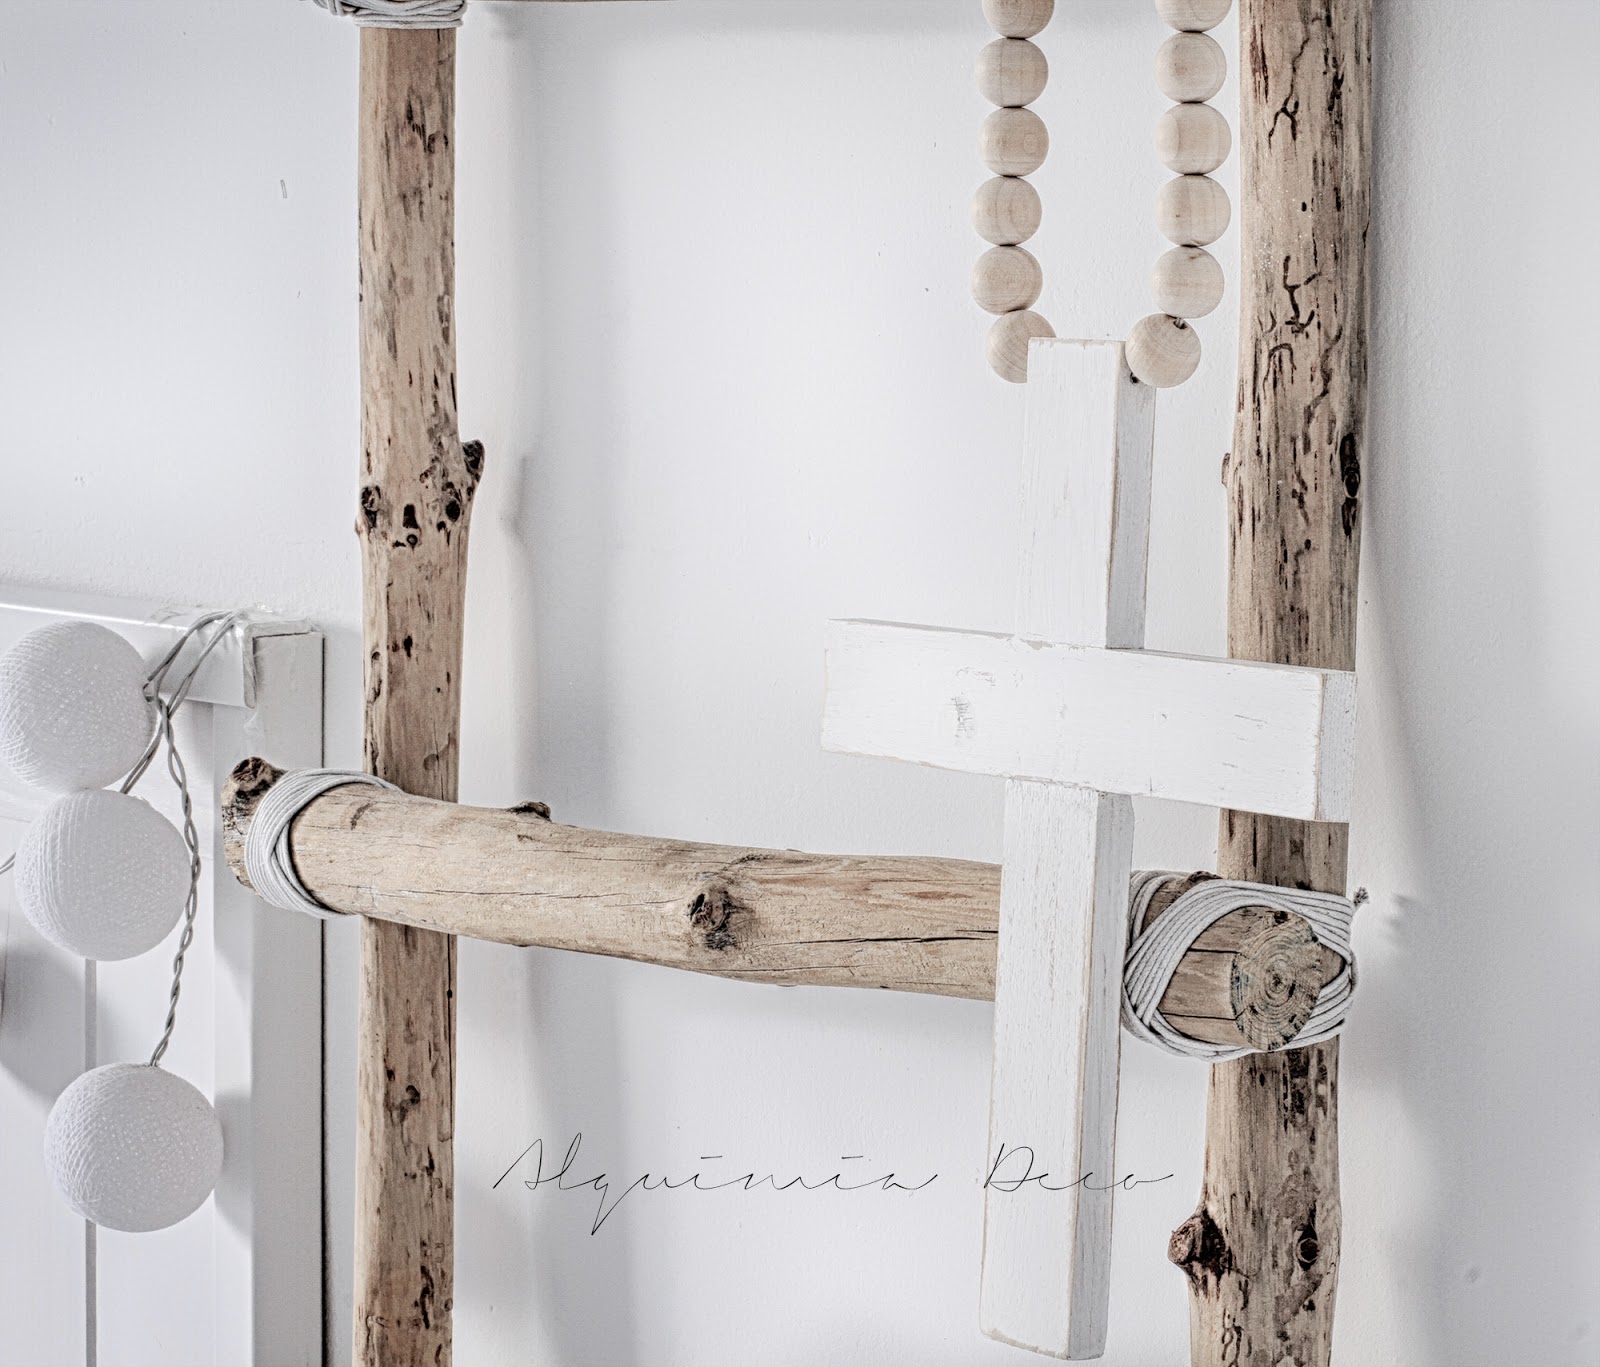 escalera decorativa palos cruz madera guirnalda luces ladder wooden alquimia deco interiorista barcelona interiorismo